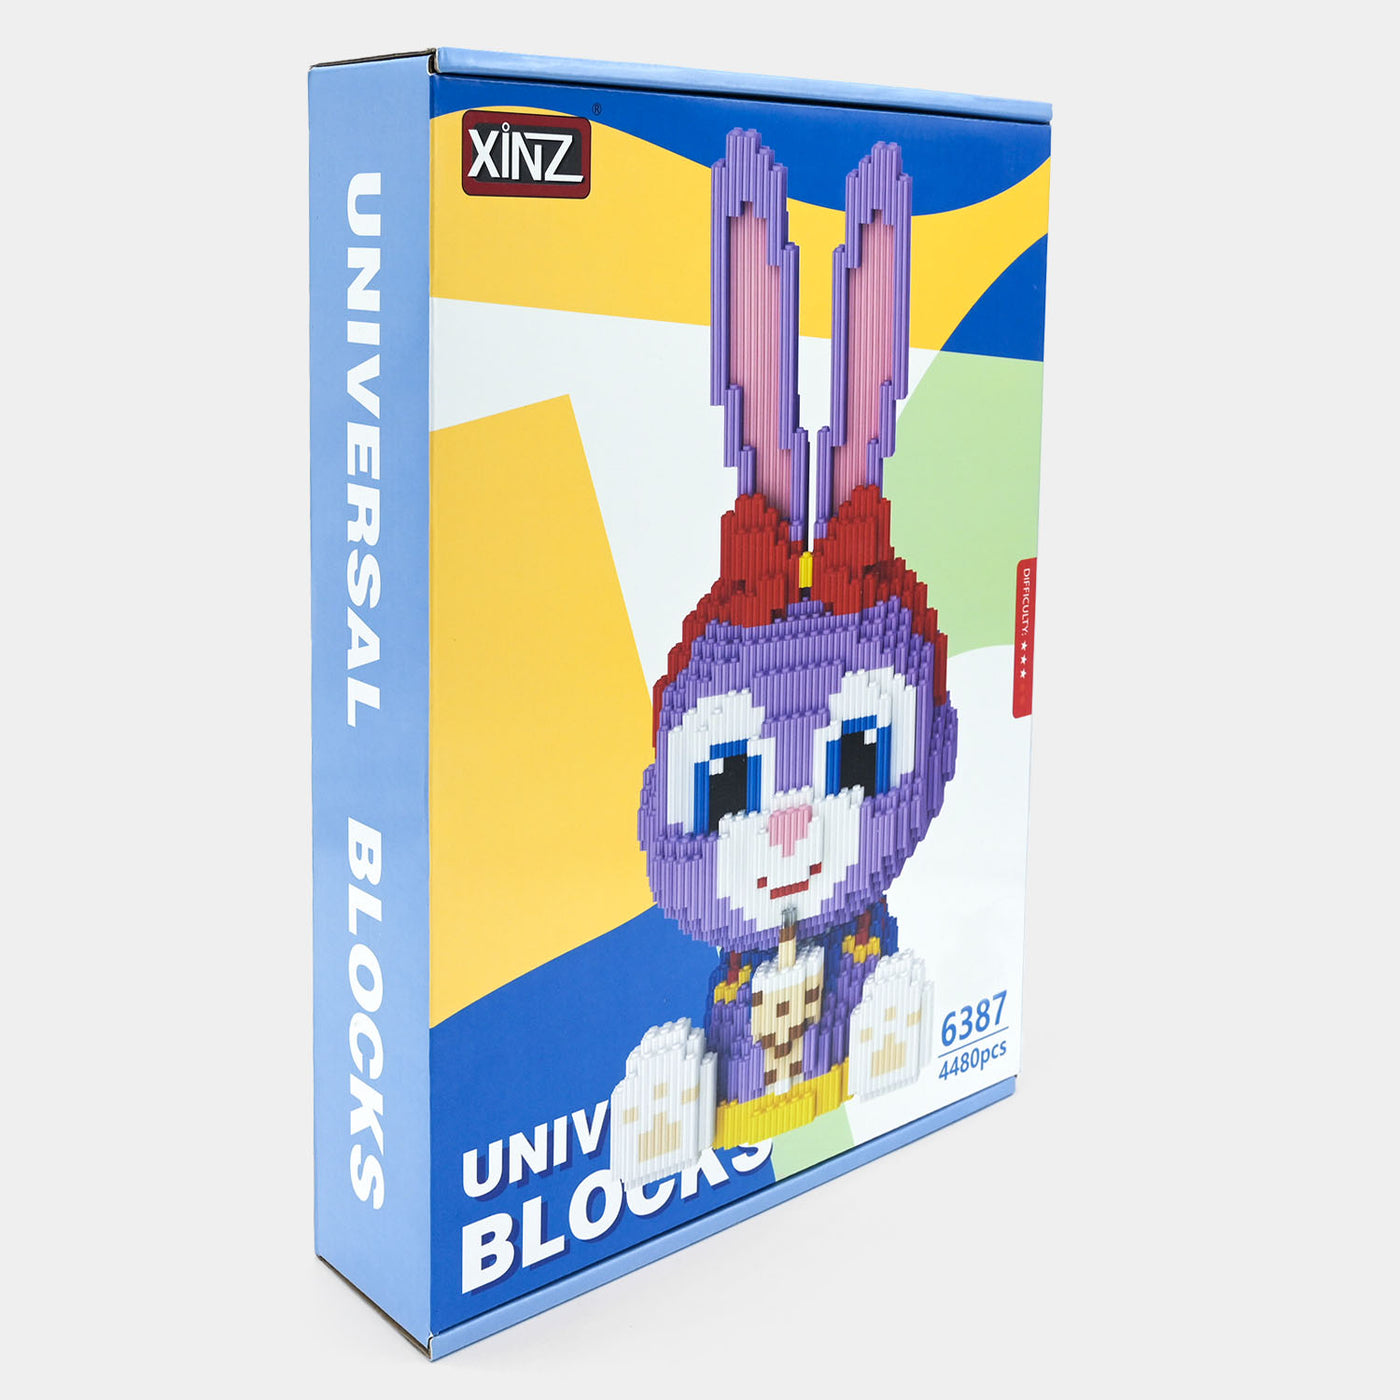 Snow White Bunny Drinks Universal Building Blocks | 4480PCs